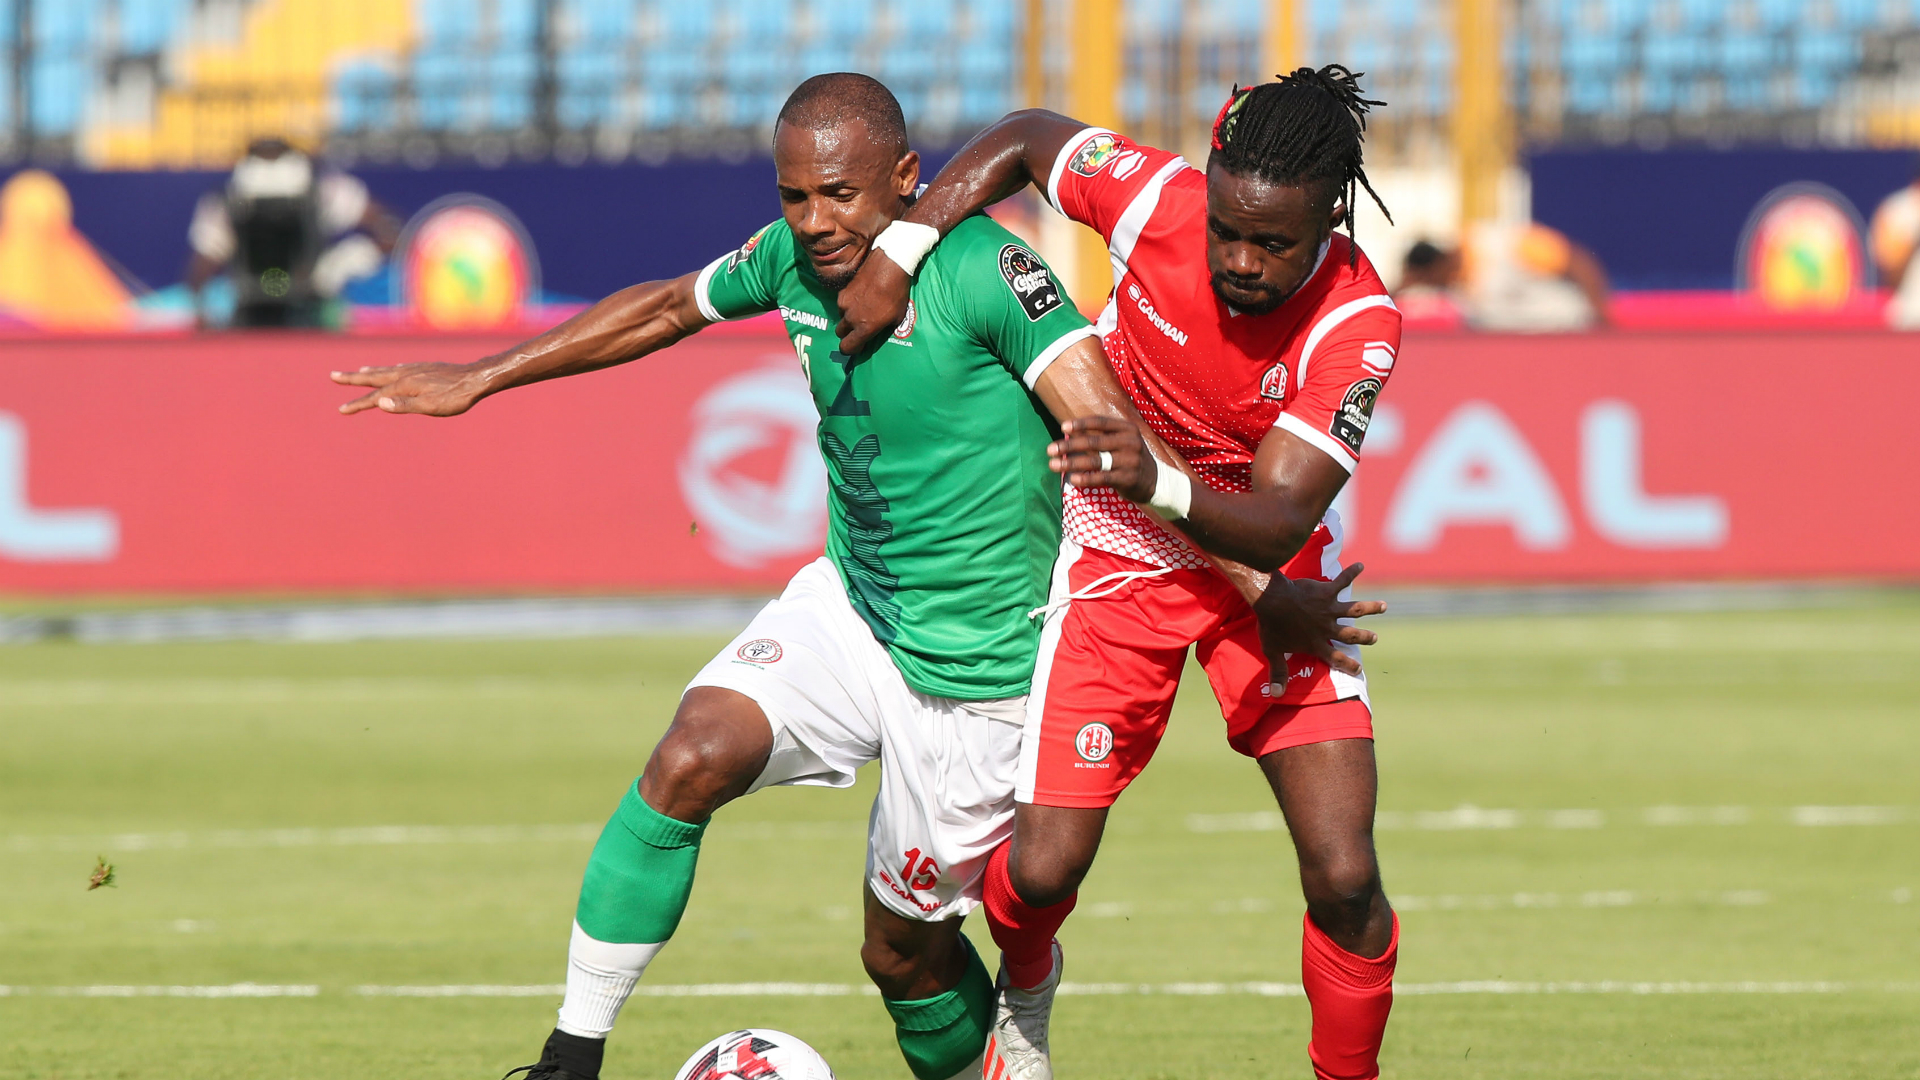 Afcon 2019: Burundi played better against Nigeria than Madagascar – Fiston Abdul Razak